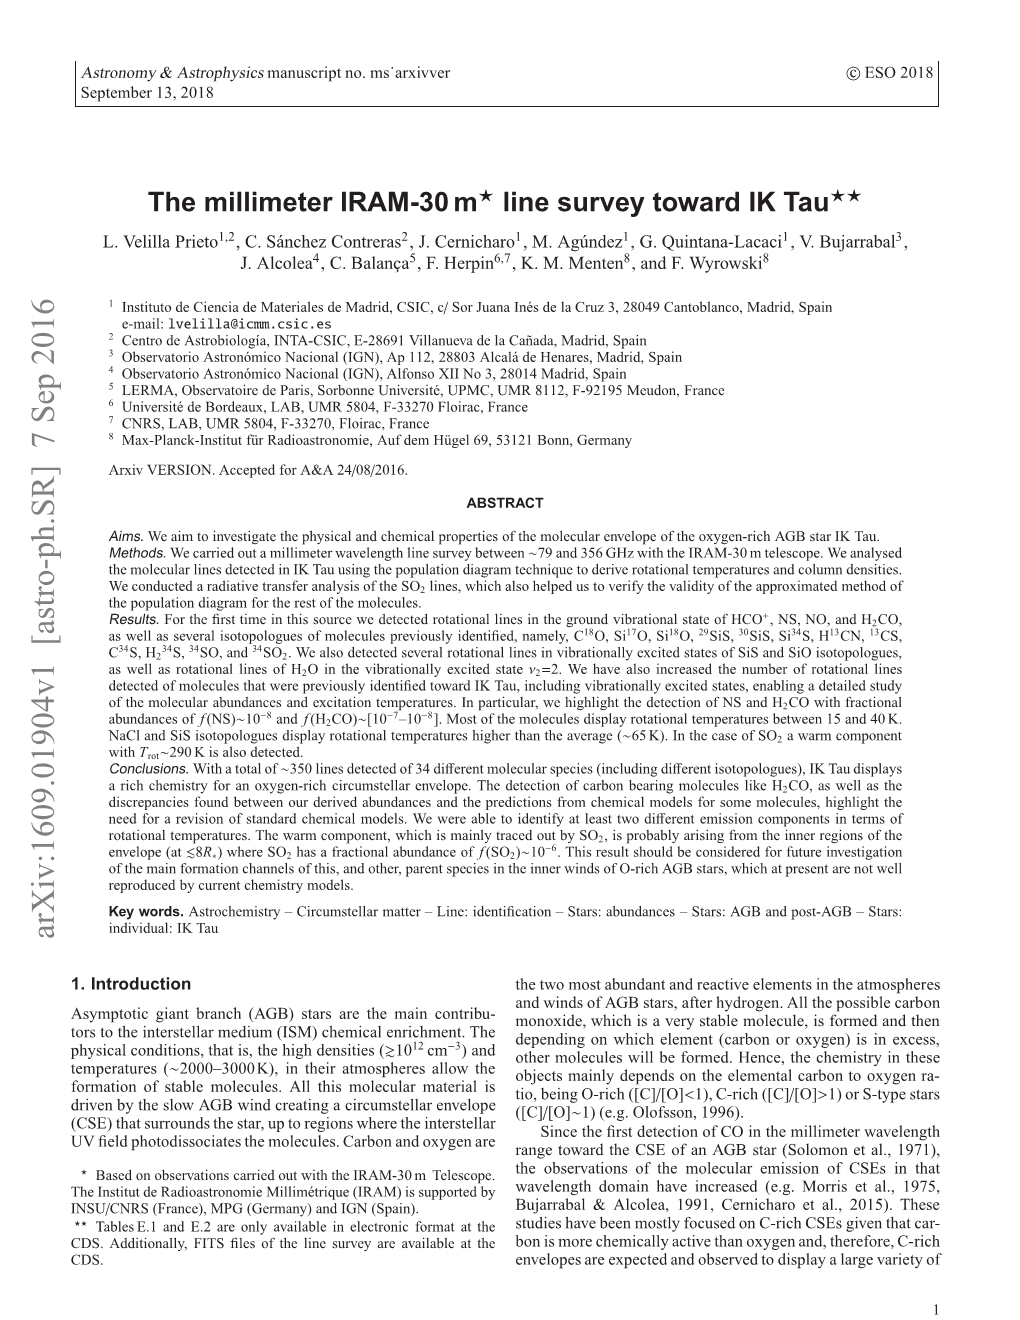 The Millimeter IRAM-30M Line Survey Toward IK Tau Diﬀerent Molecular Species (E.G